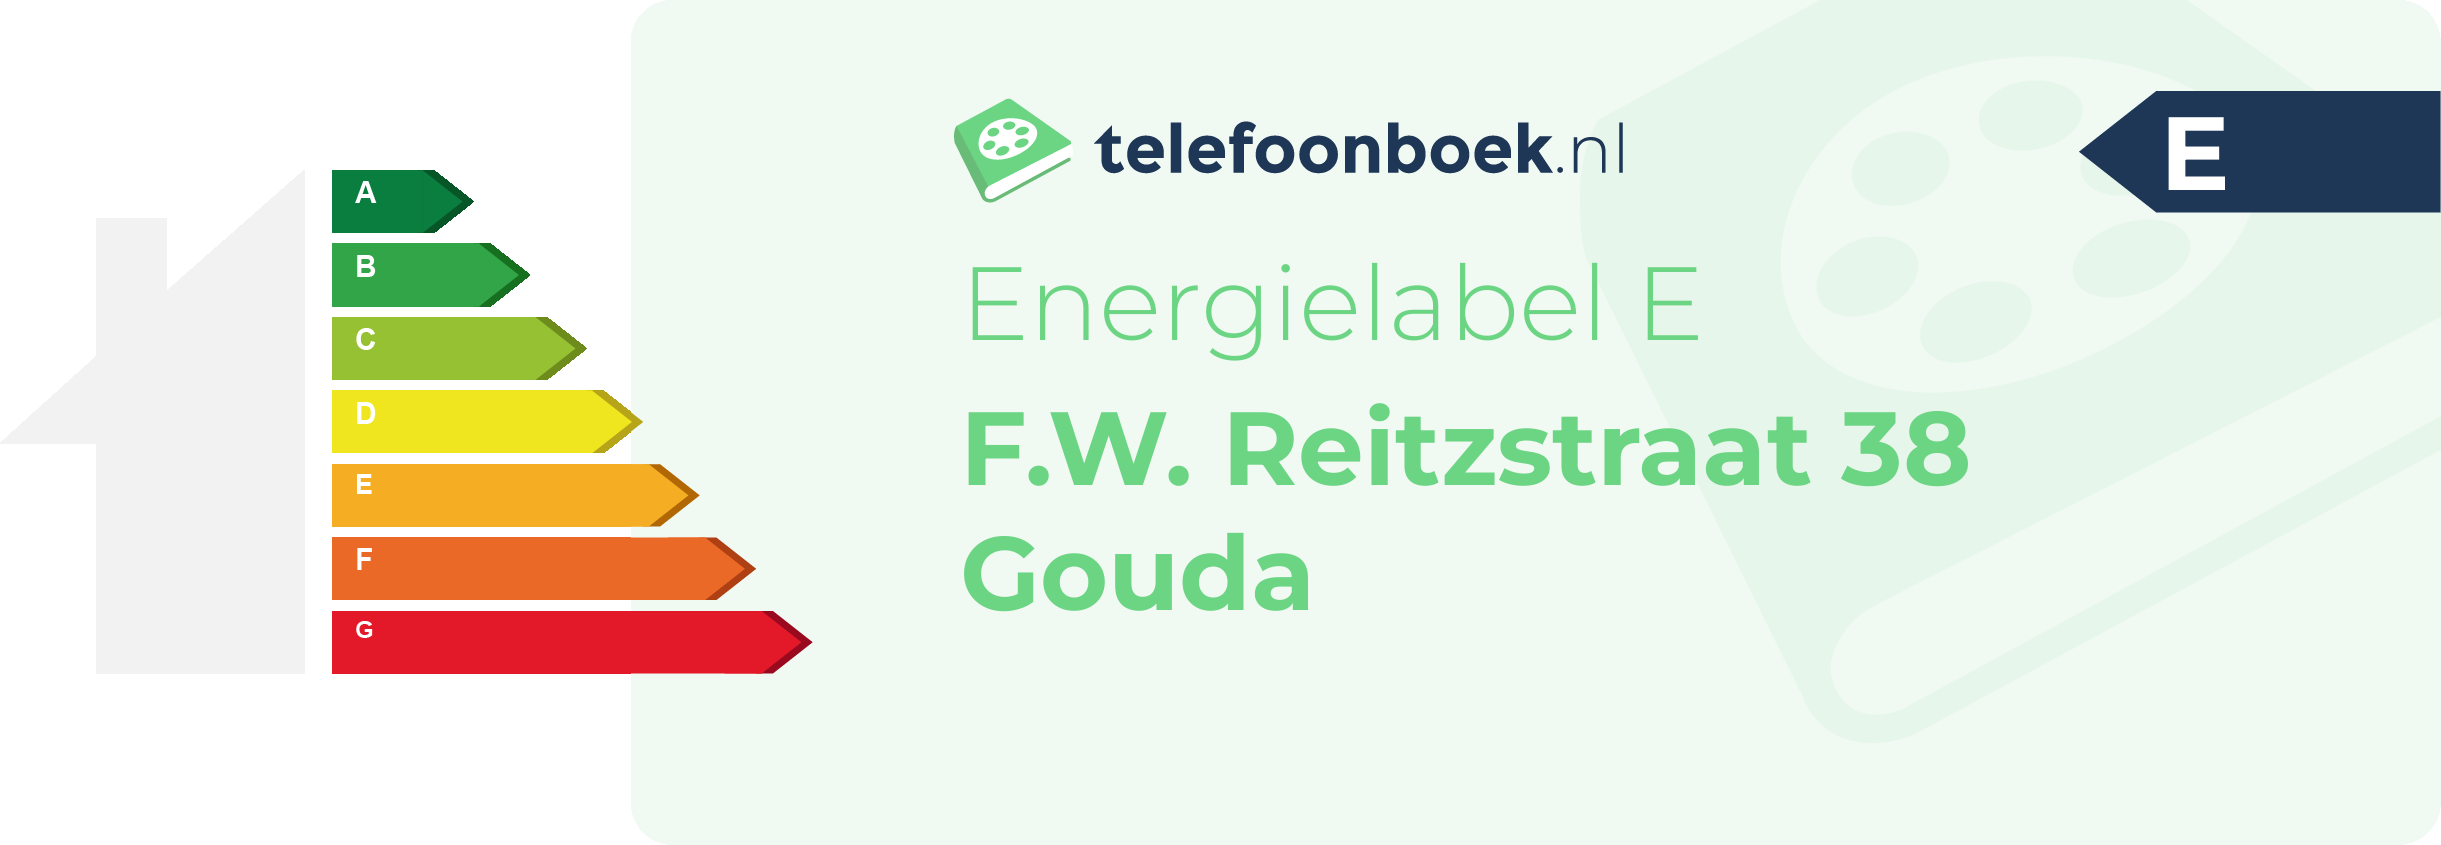 Energielabel F.W. Reitzstraat 38 Gouda